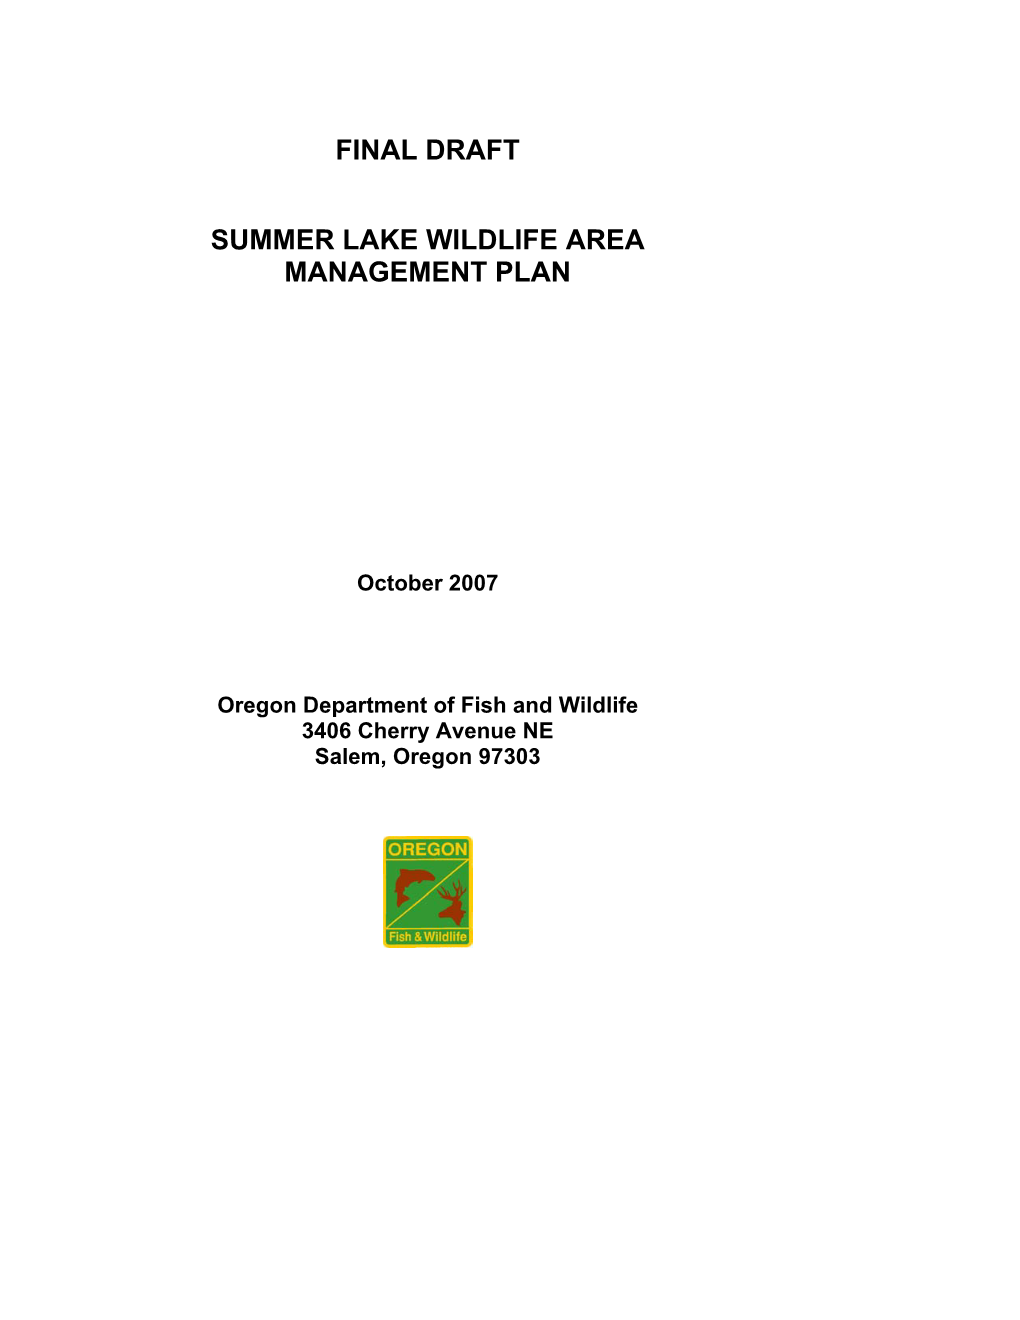 Final Draft Summer Lake Wildlife Area Management